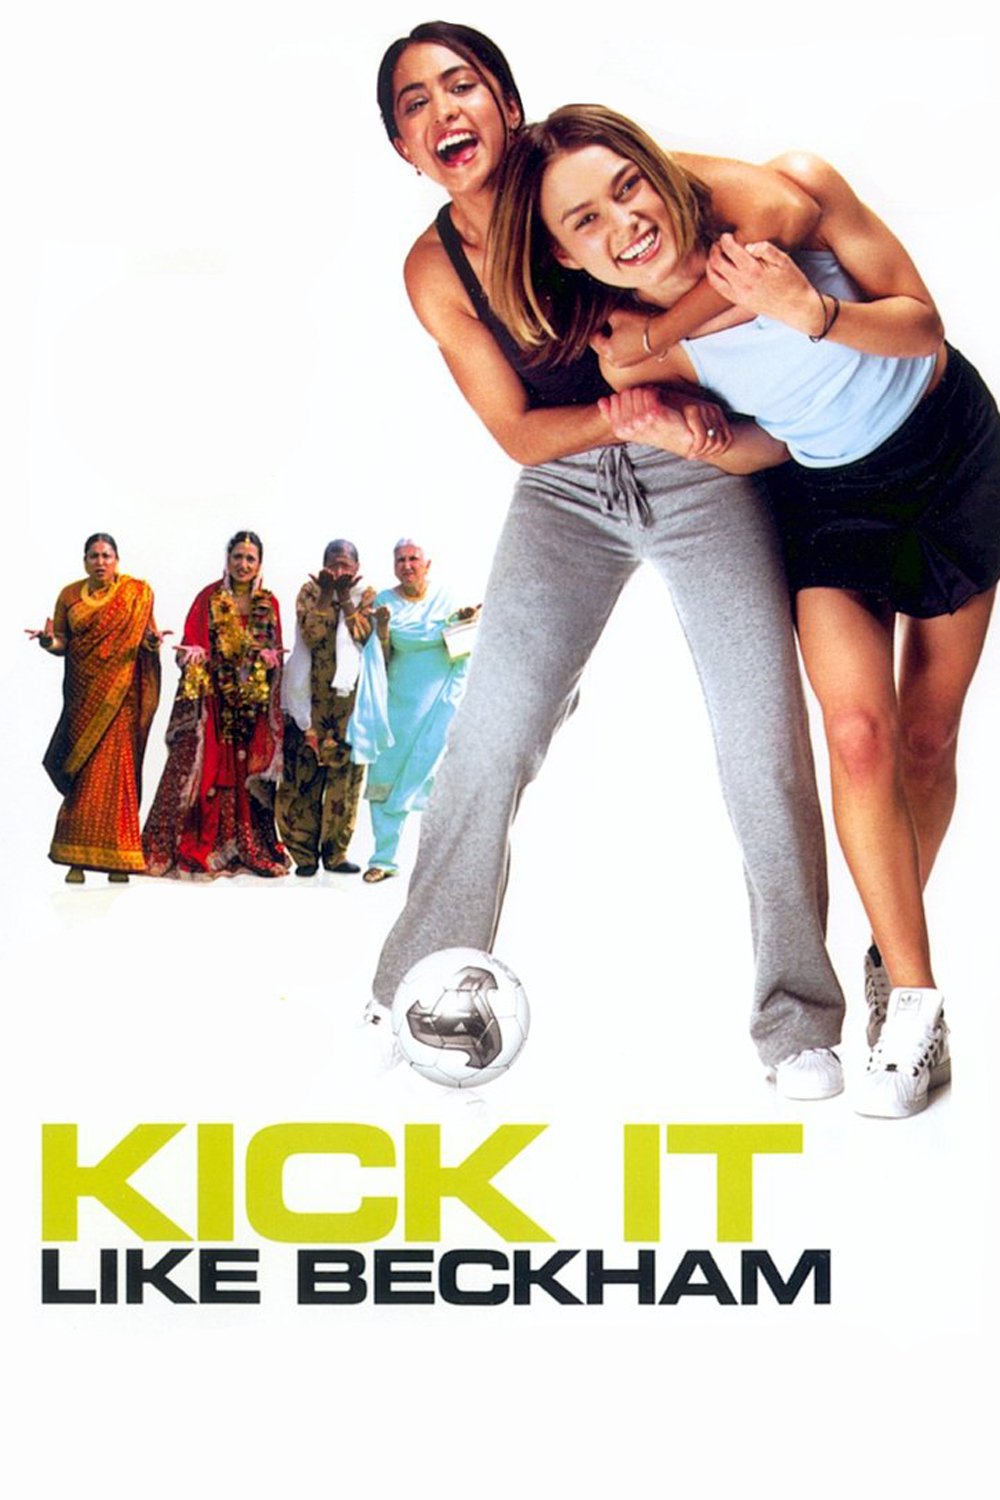 Plakat von "Kick it like Beckham"